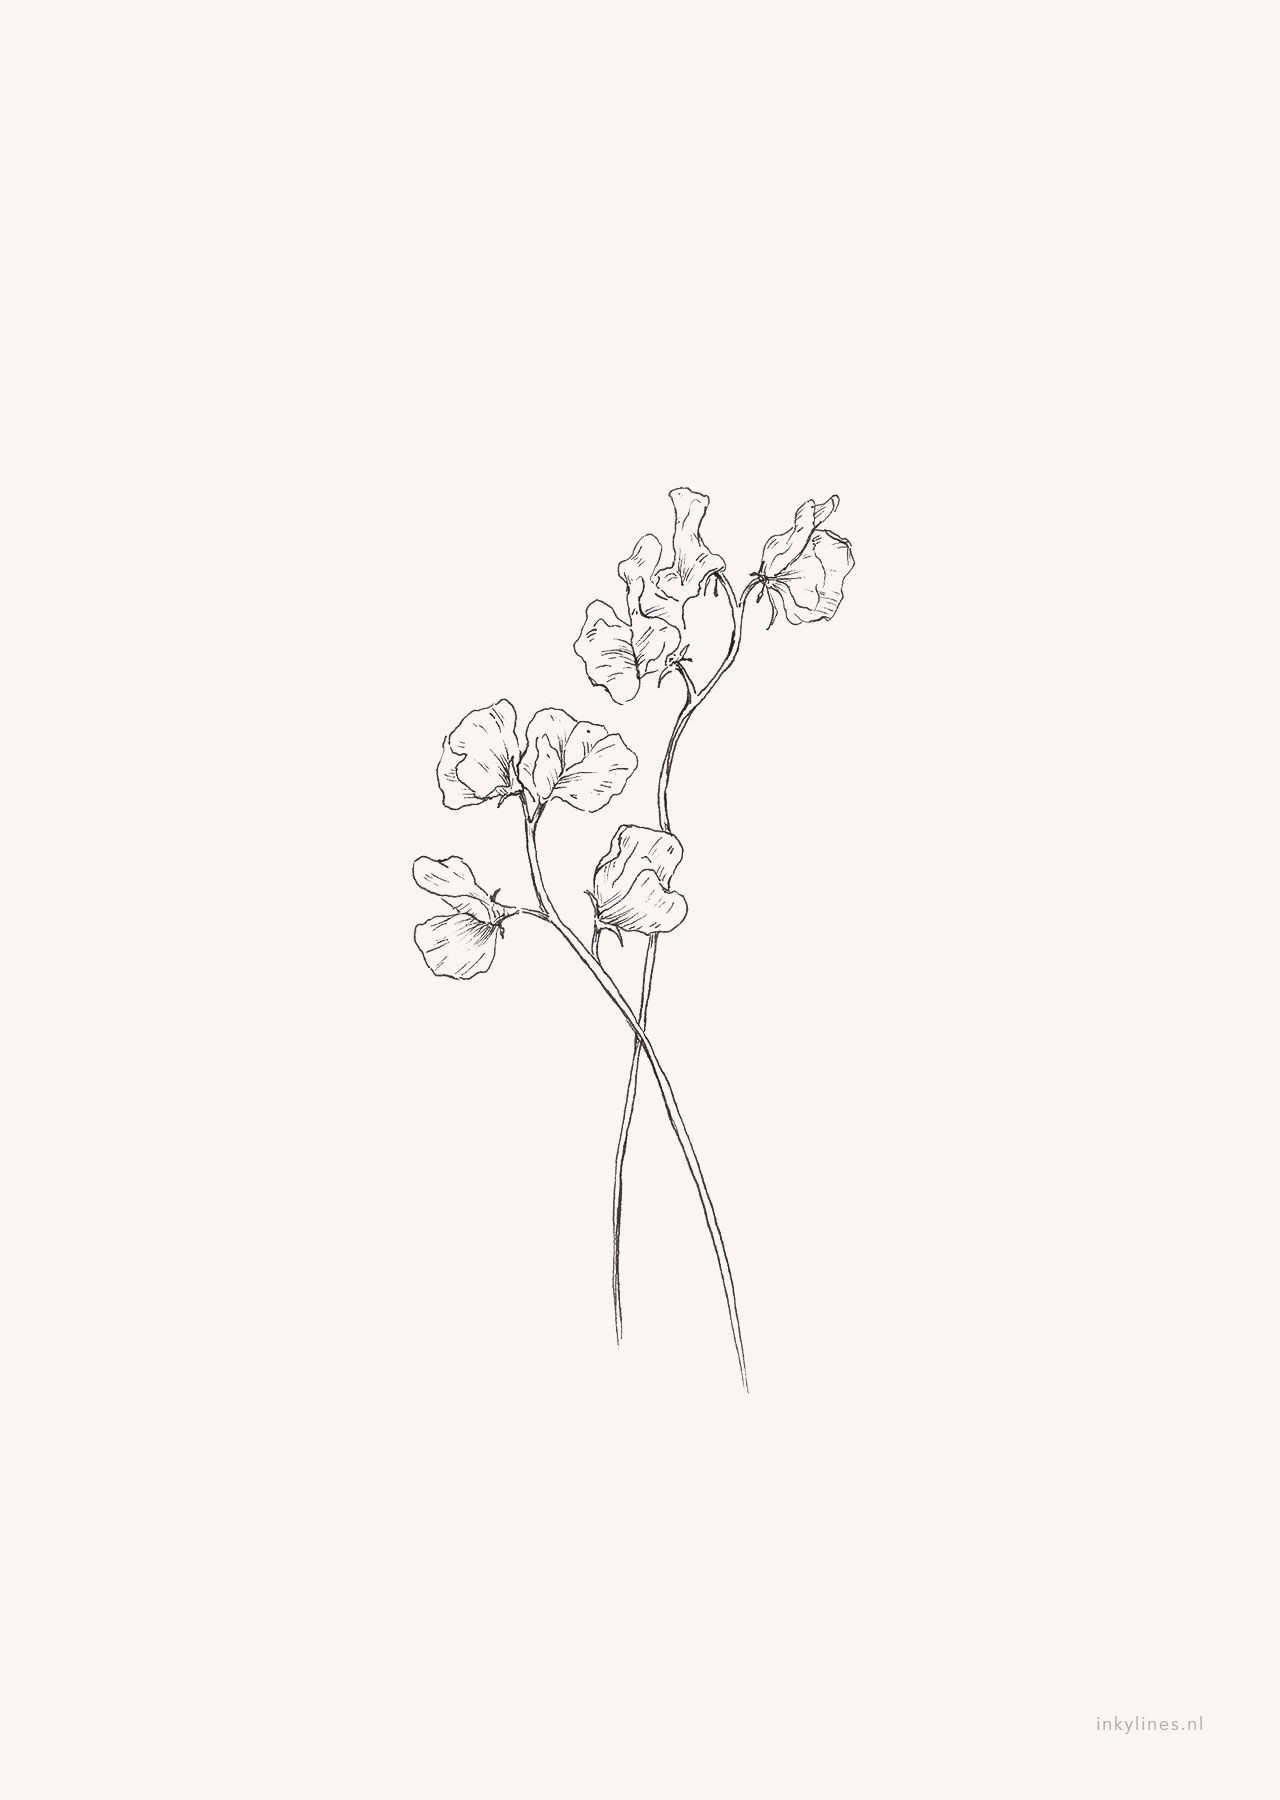 Drawing Of Pretty Flowers Sweet Pea In 2019 Journal Drawings Flowers Art